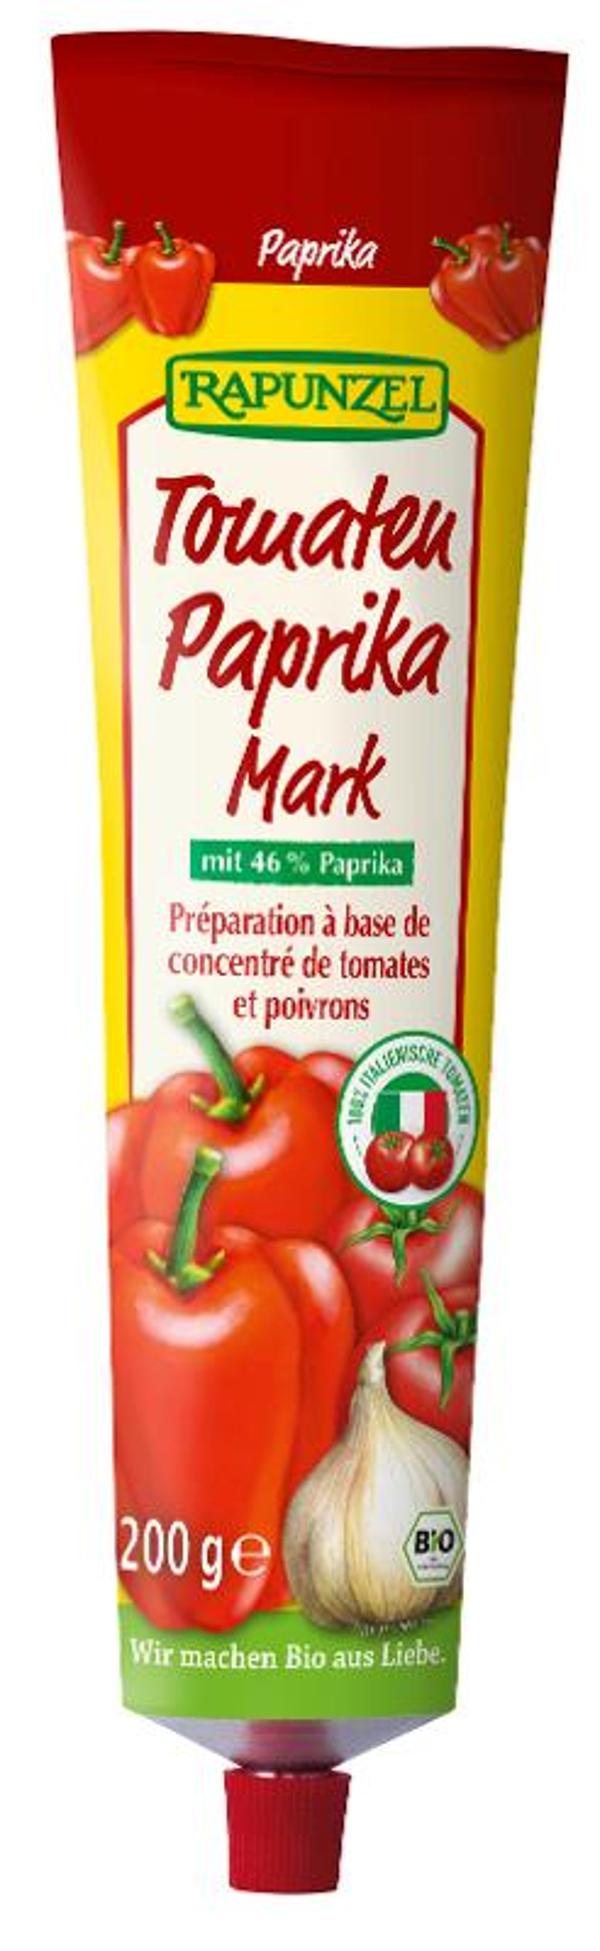 Produktfoto zu Tomaten Paprika Mark